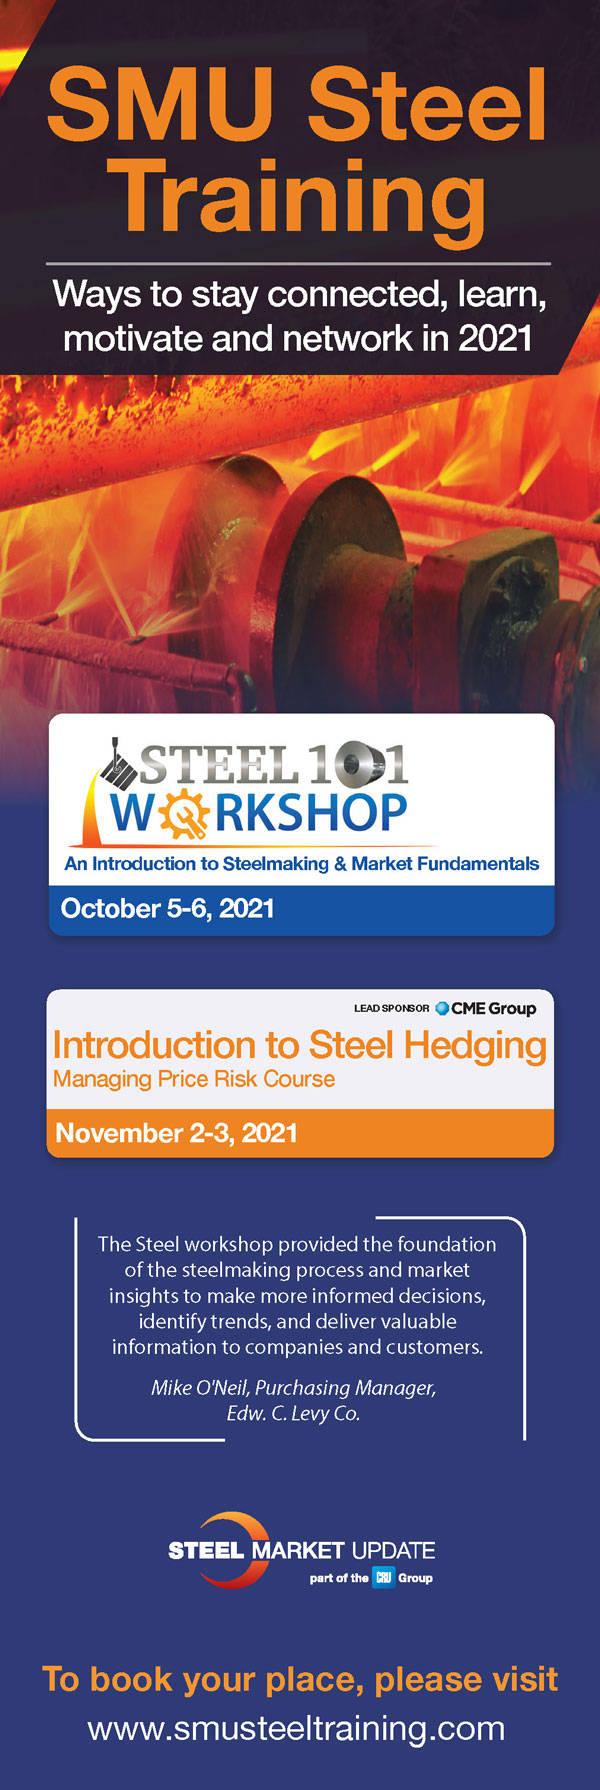 SMU Steel Advertisement